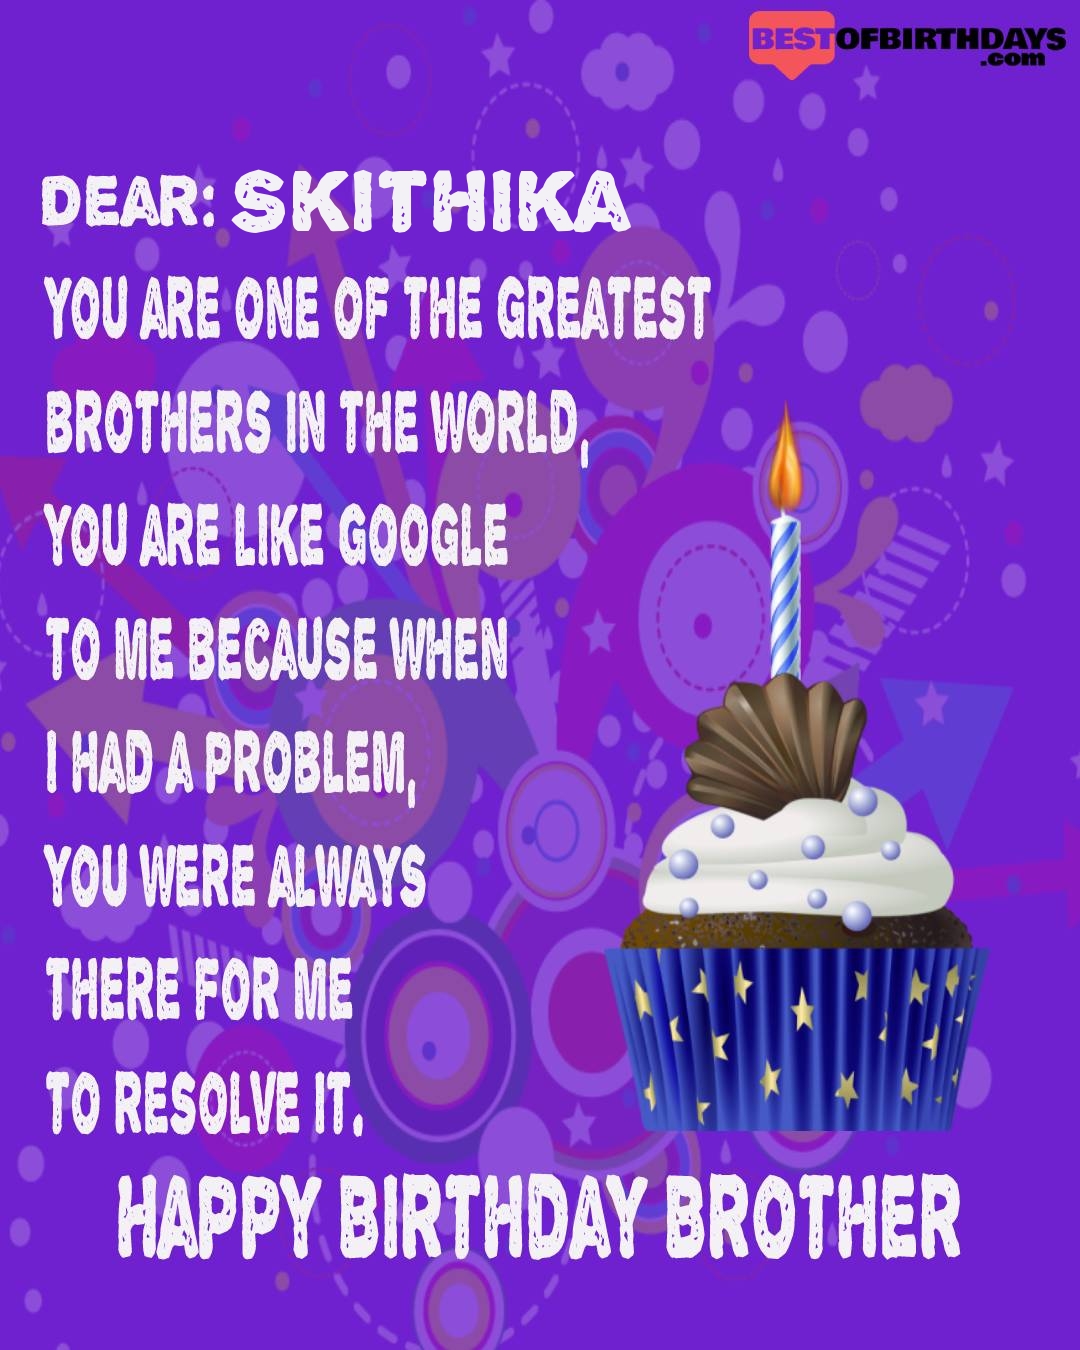 Happy birthday skithika bhai brother bro